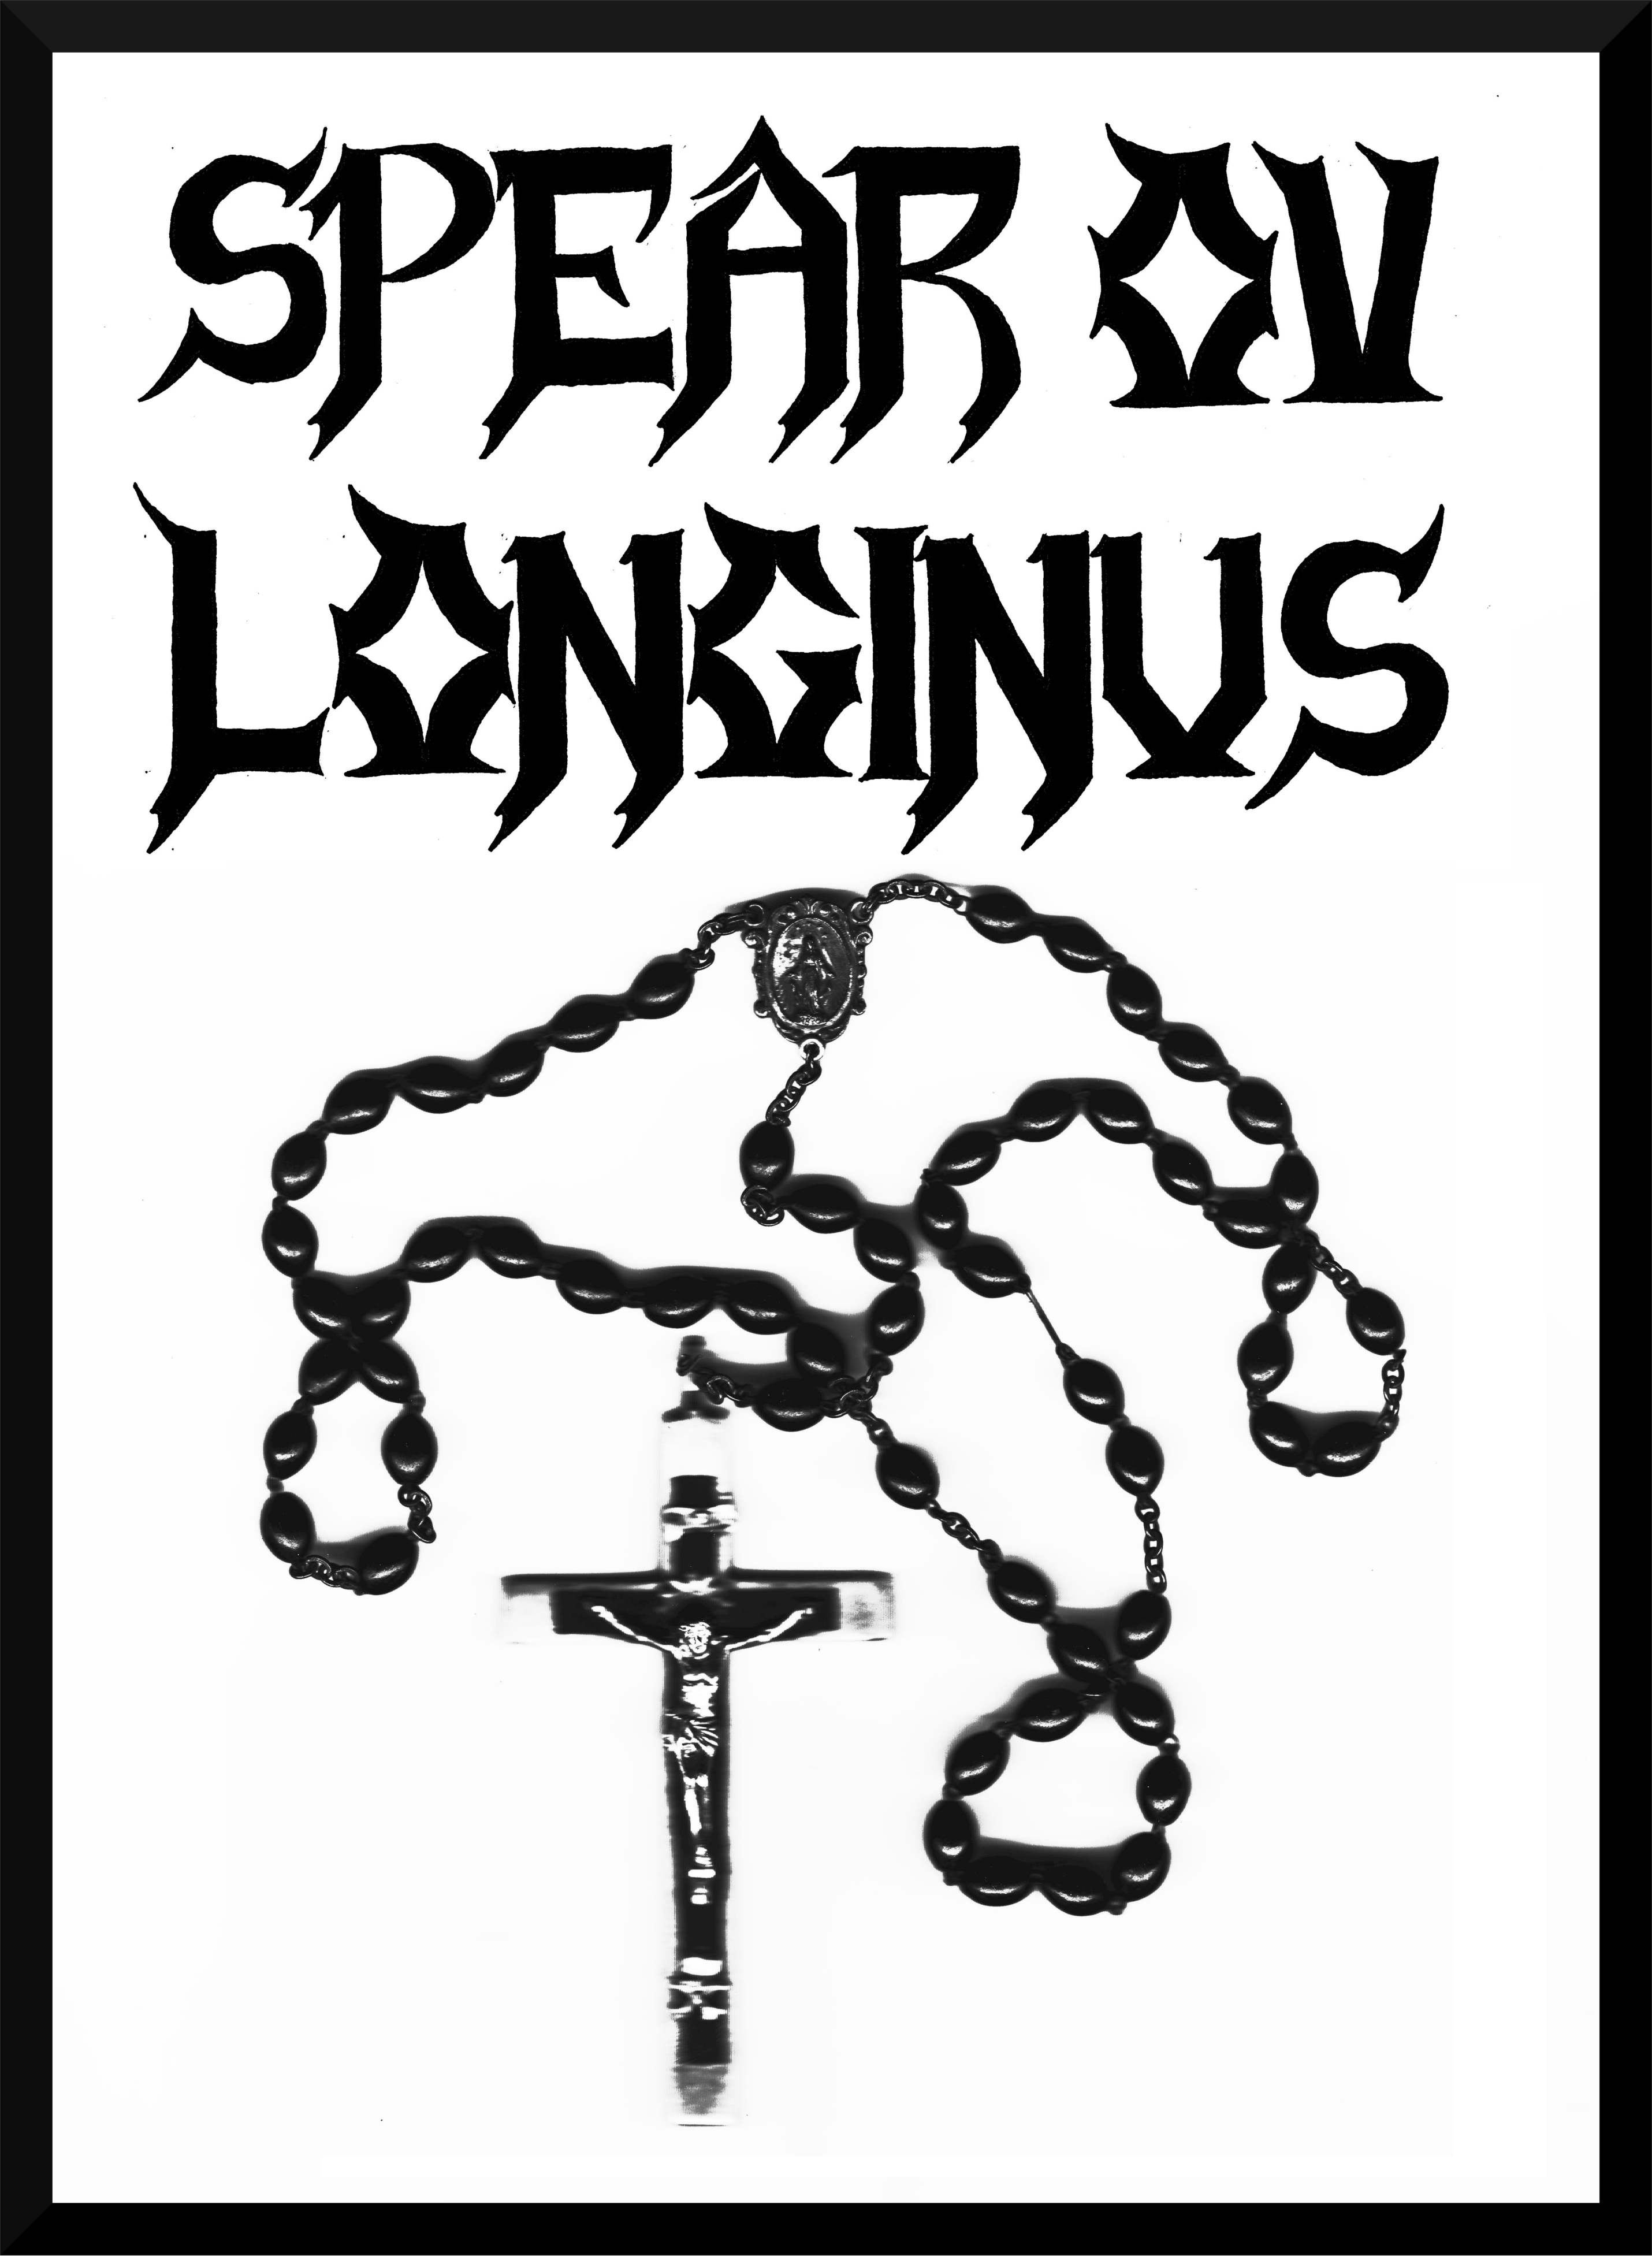 Spear of Longinus by Nosebleed Comics